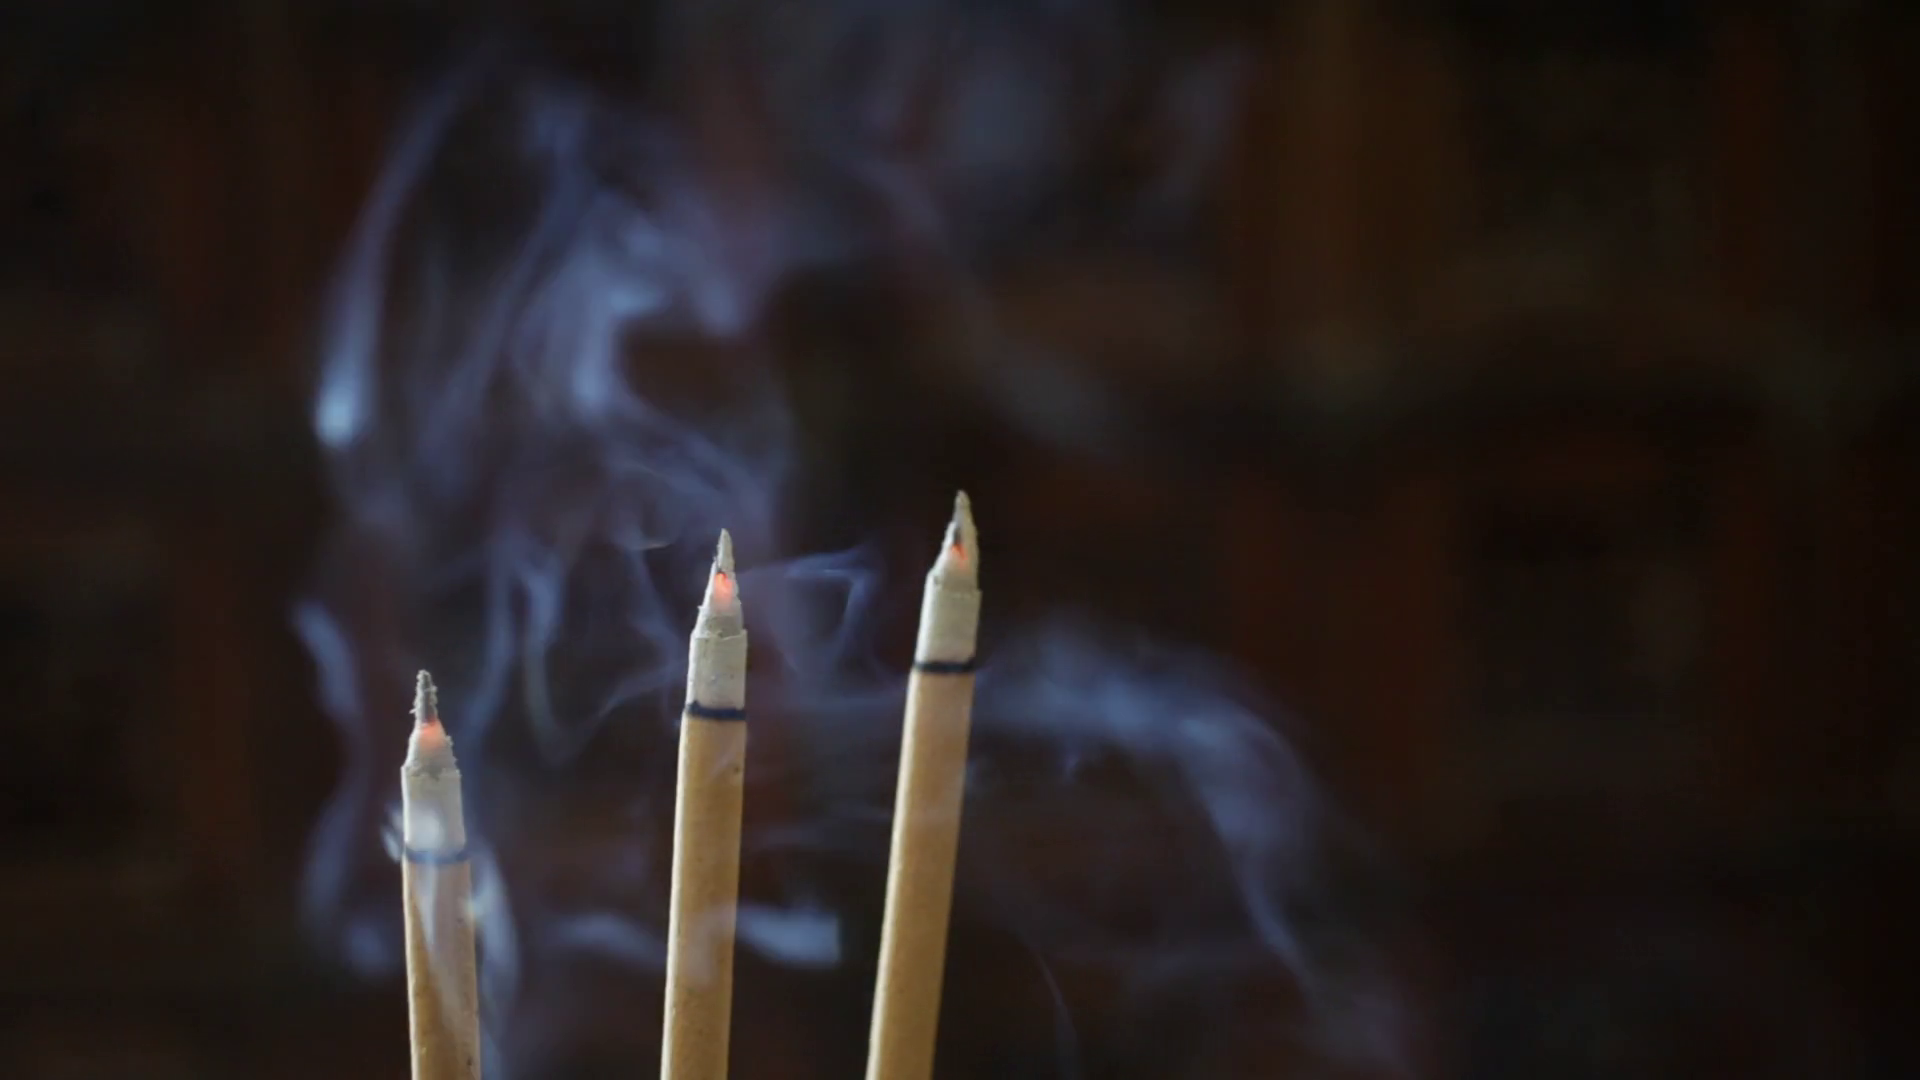 CU Burning incense sticks / Singapore Stock Video Footage - VideoBlocks